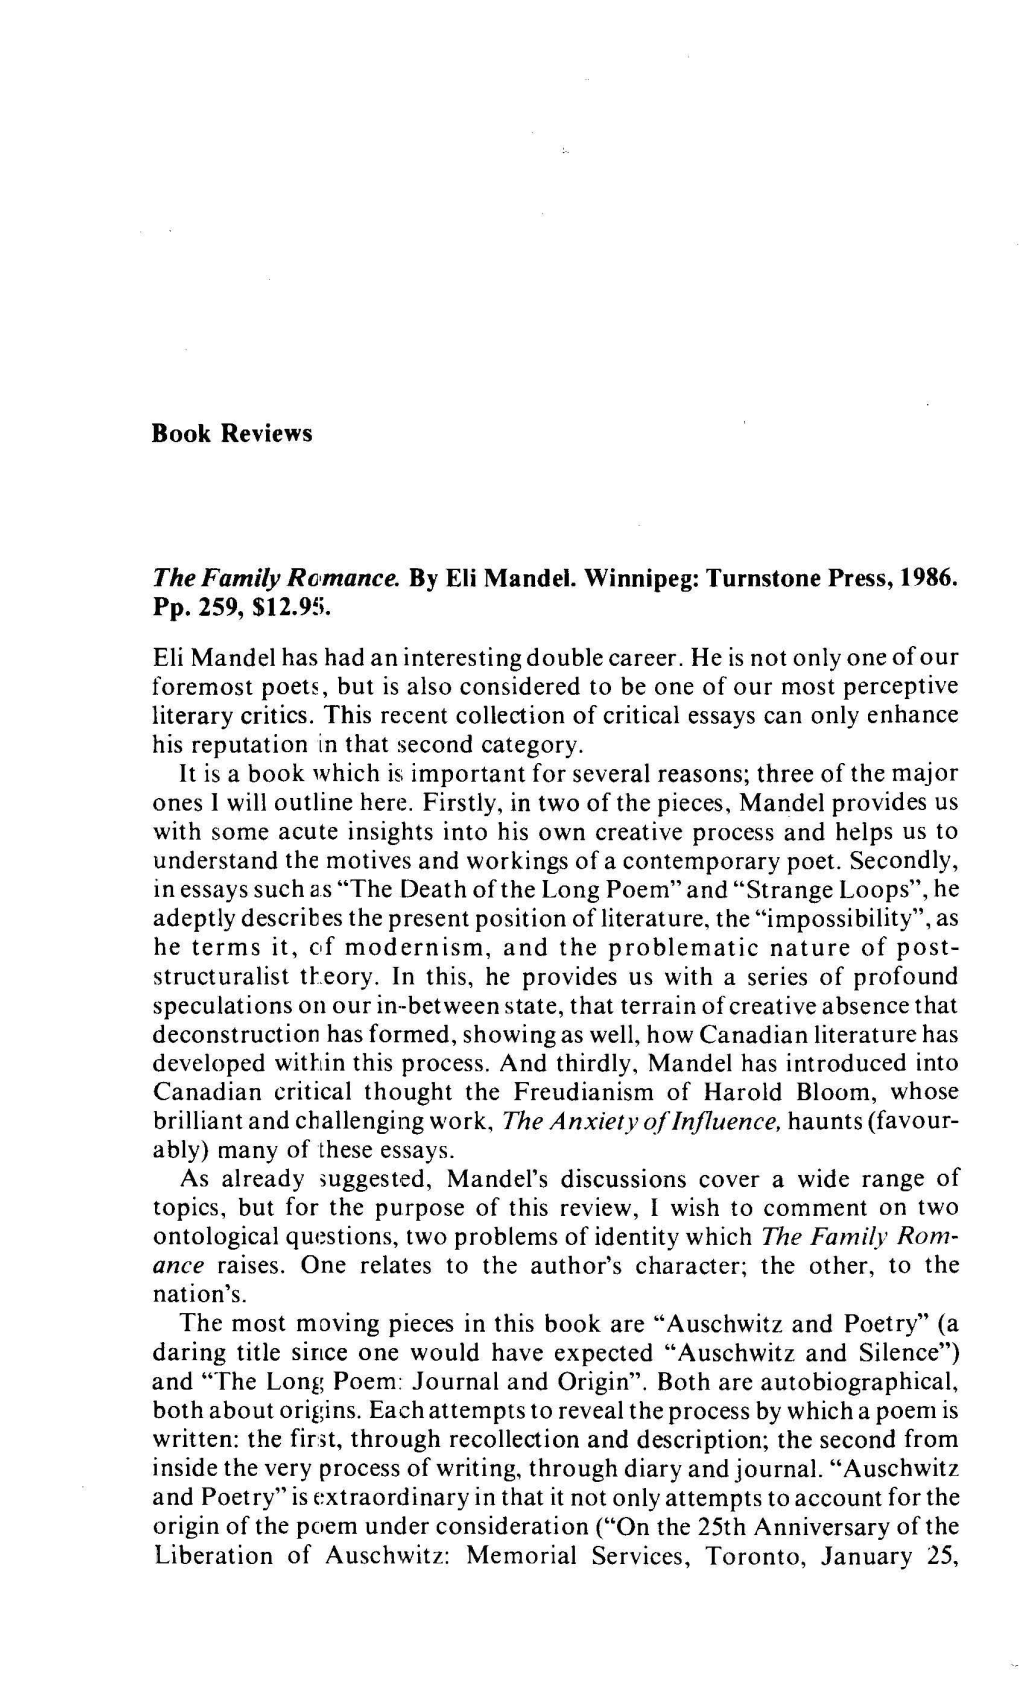 Book Reviews the Family Rlj,Mance. by Eli Mandel. Winnipeg